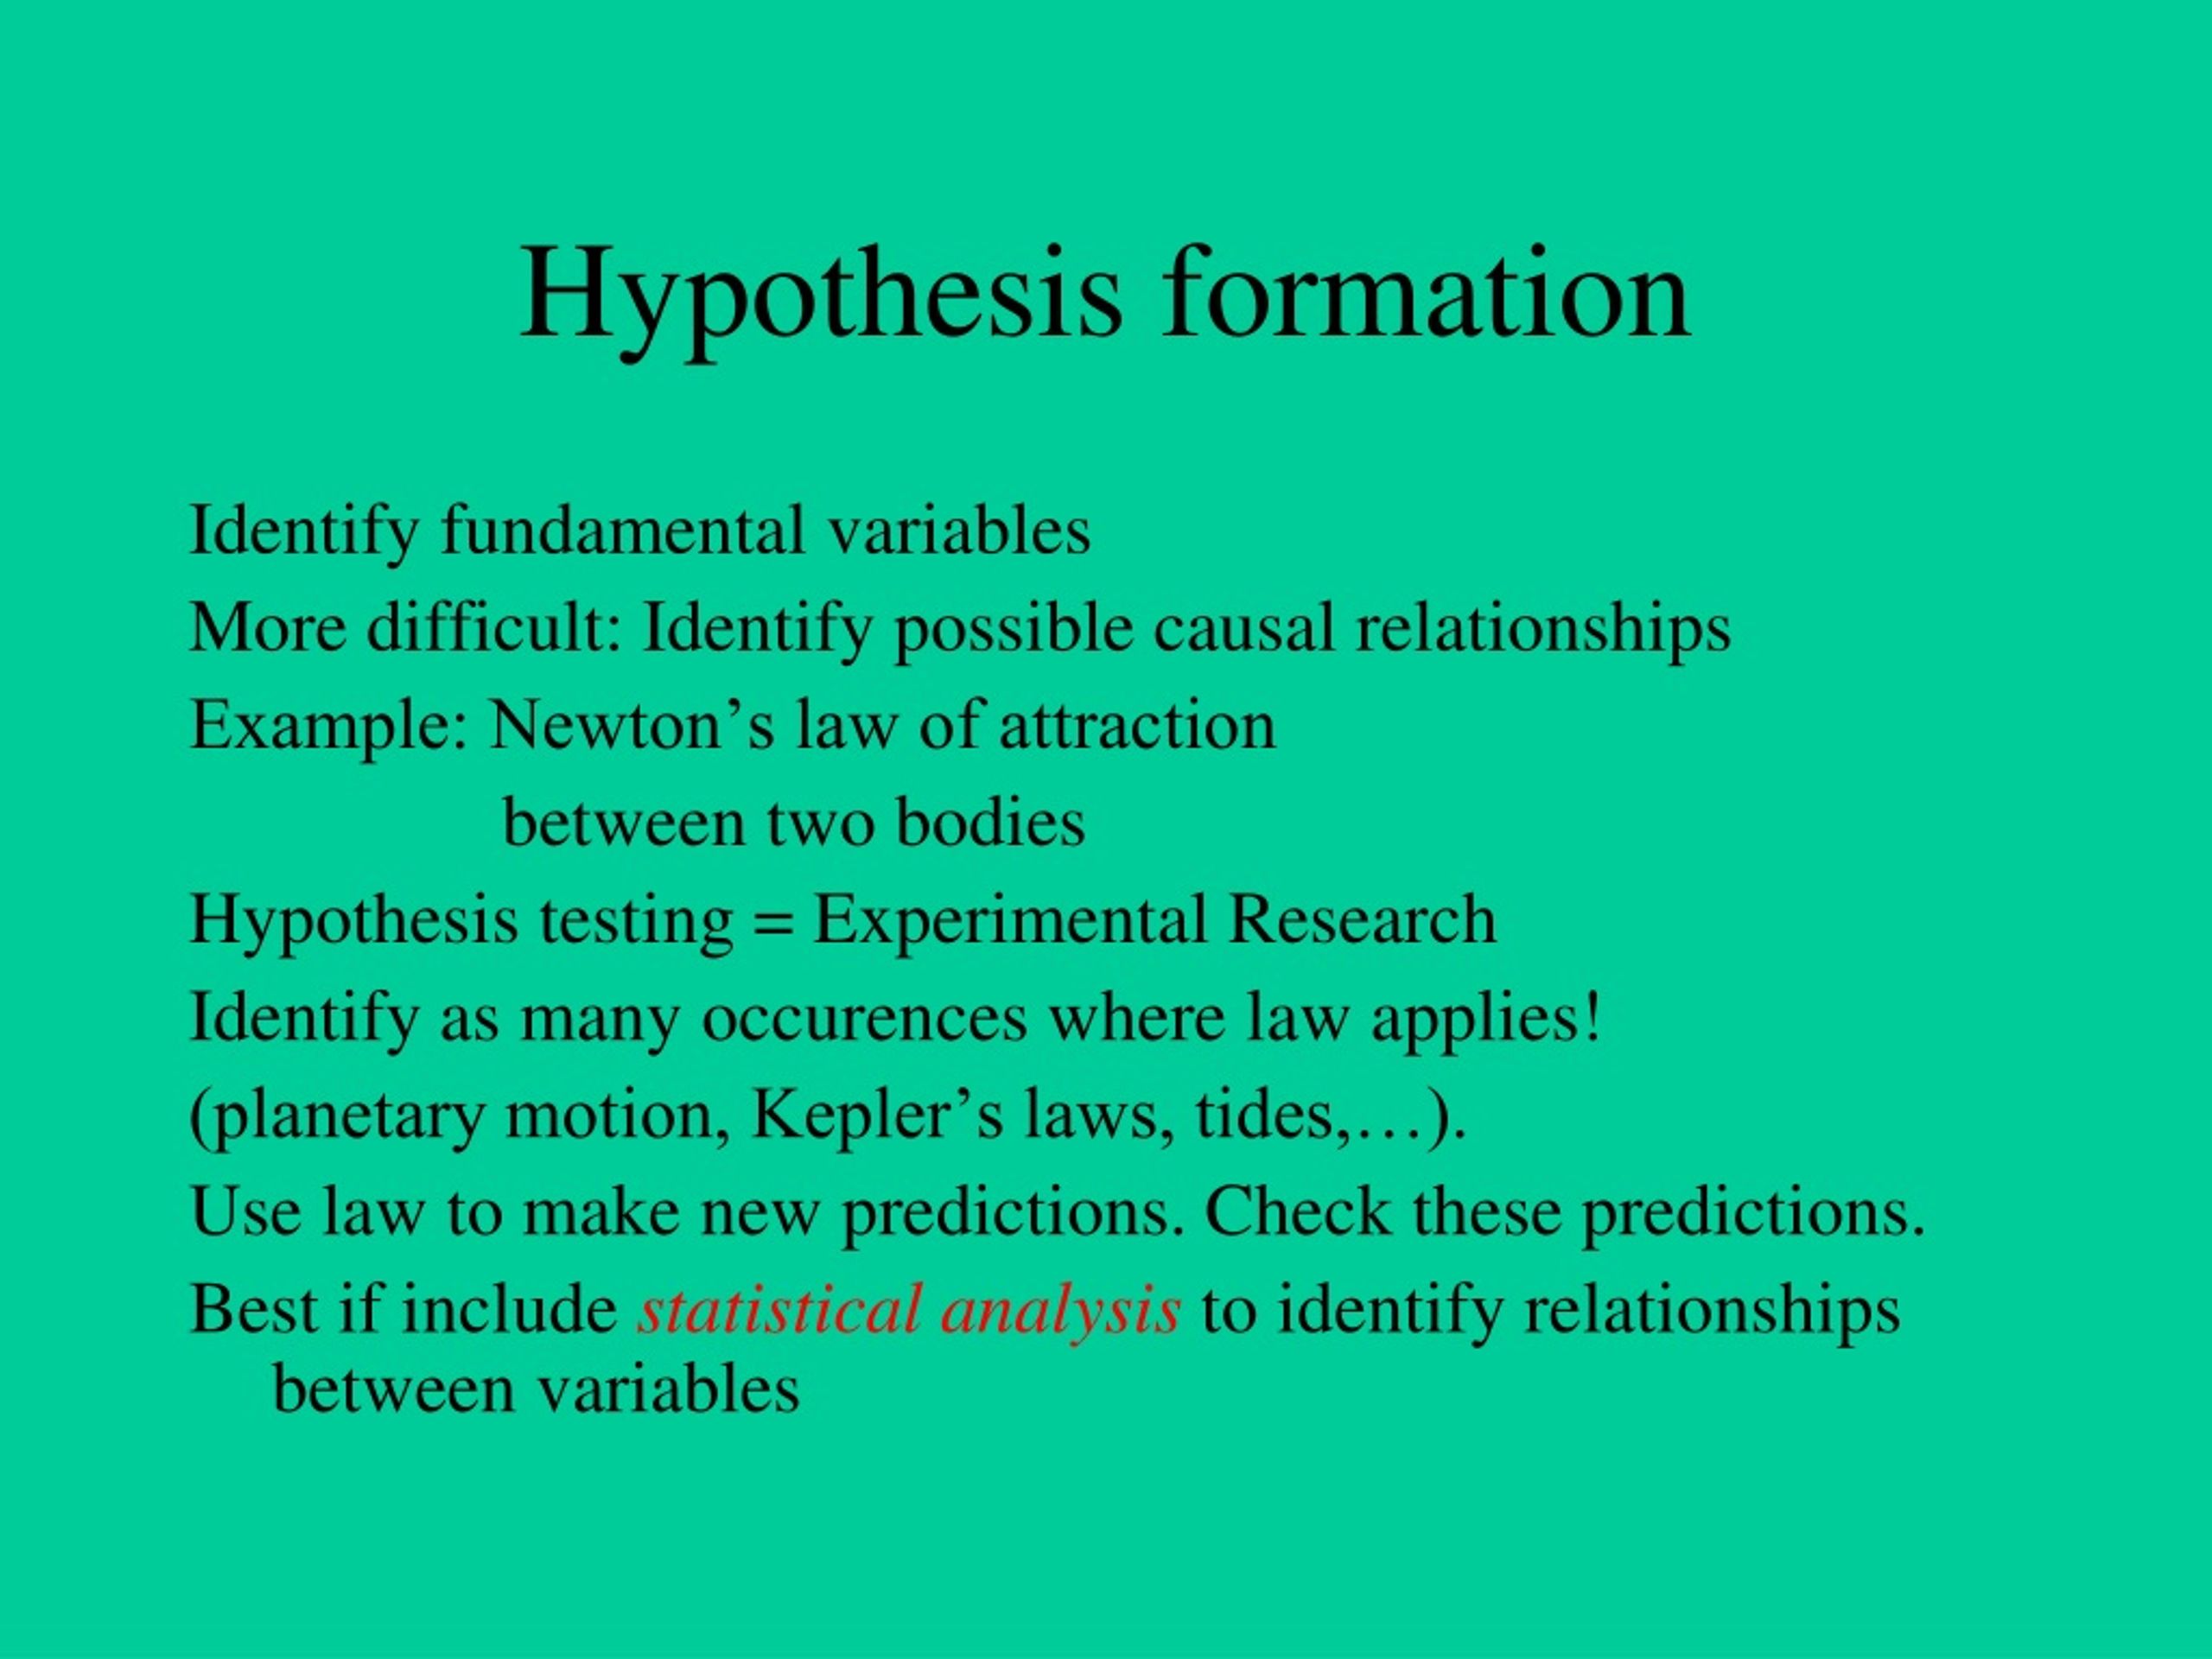 catastrophic hypothesis formation